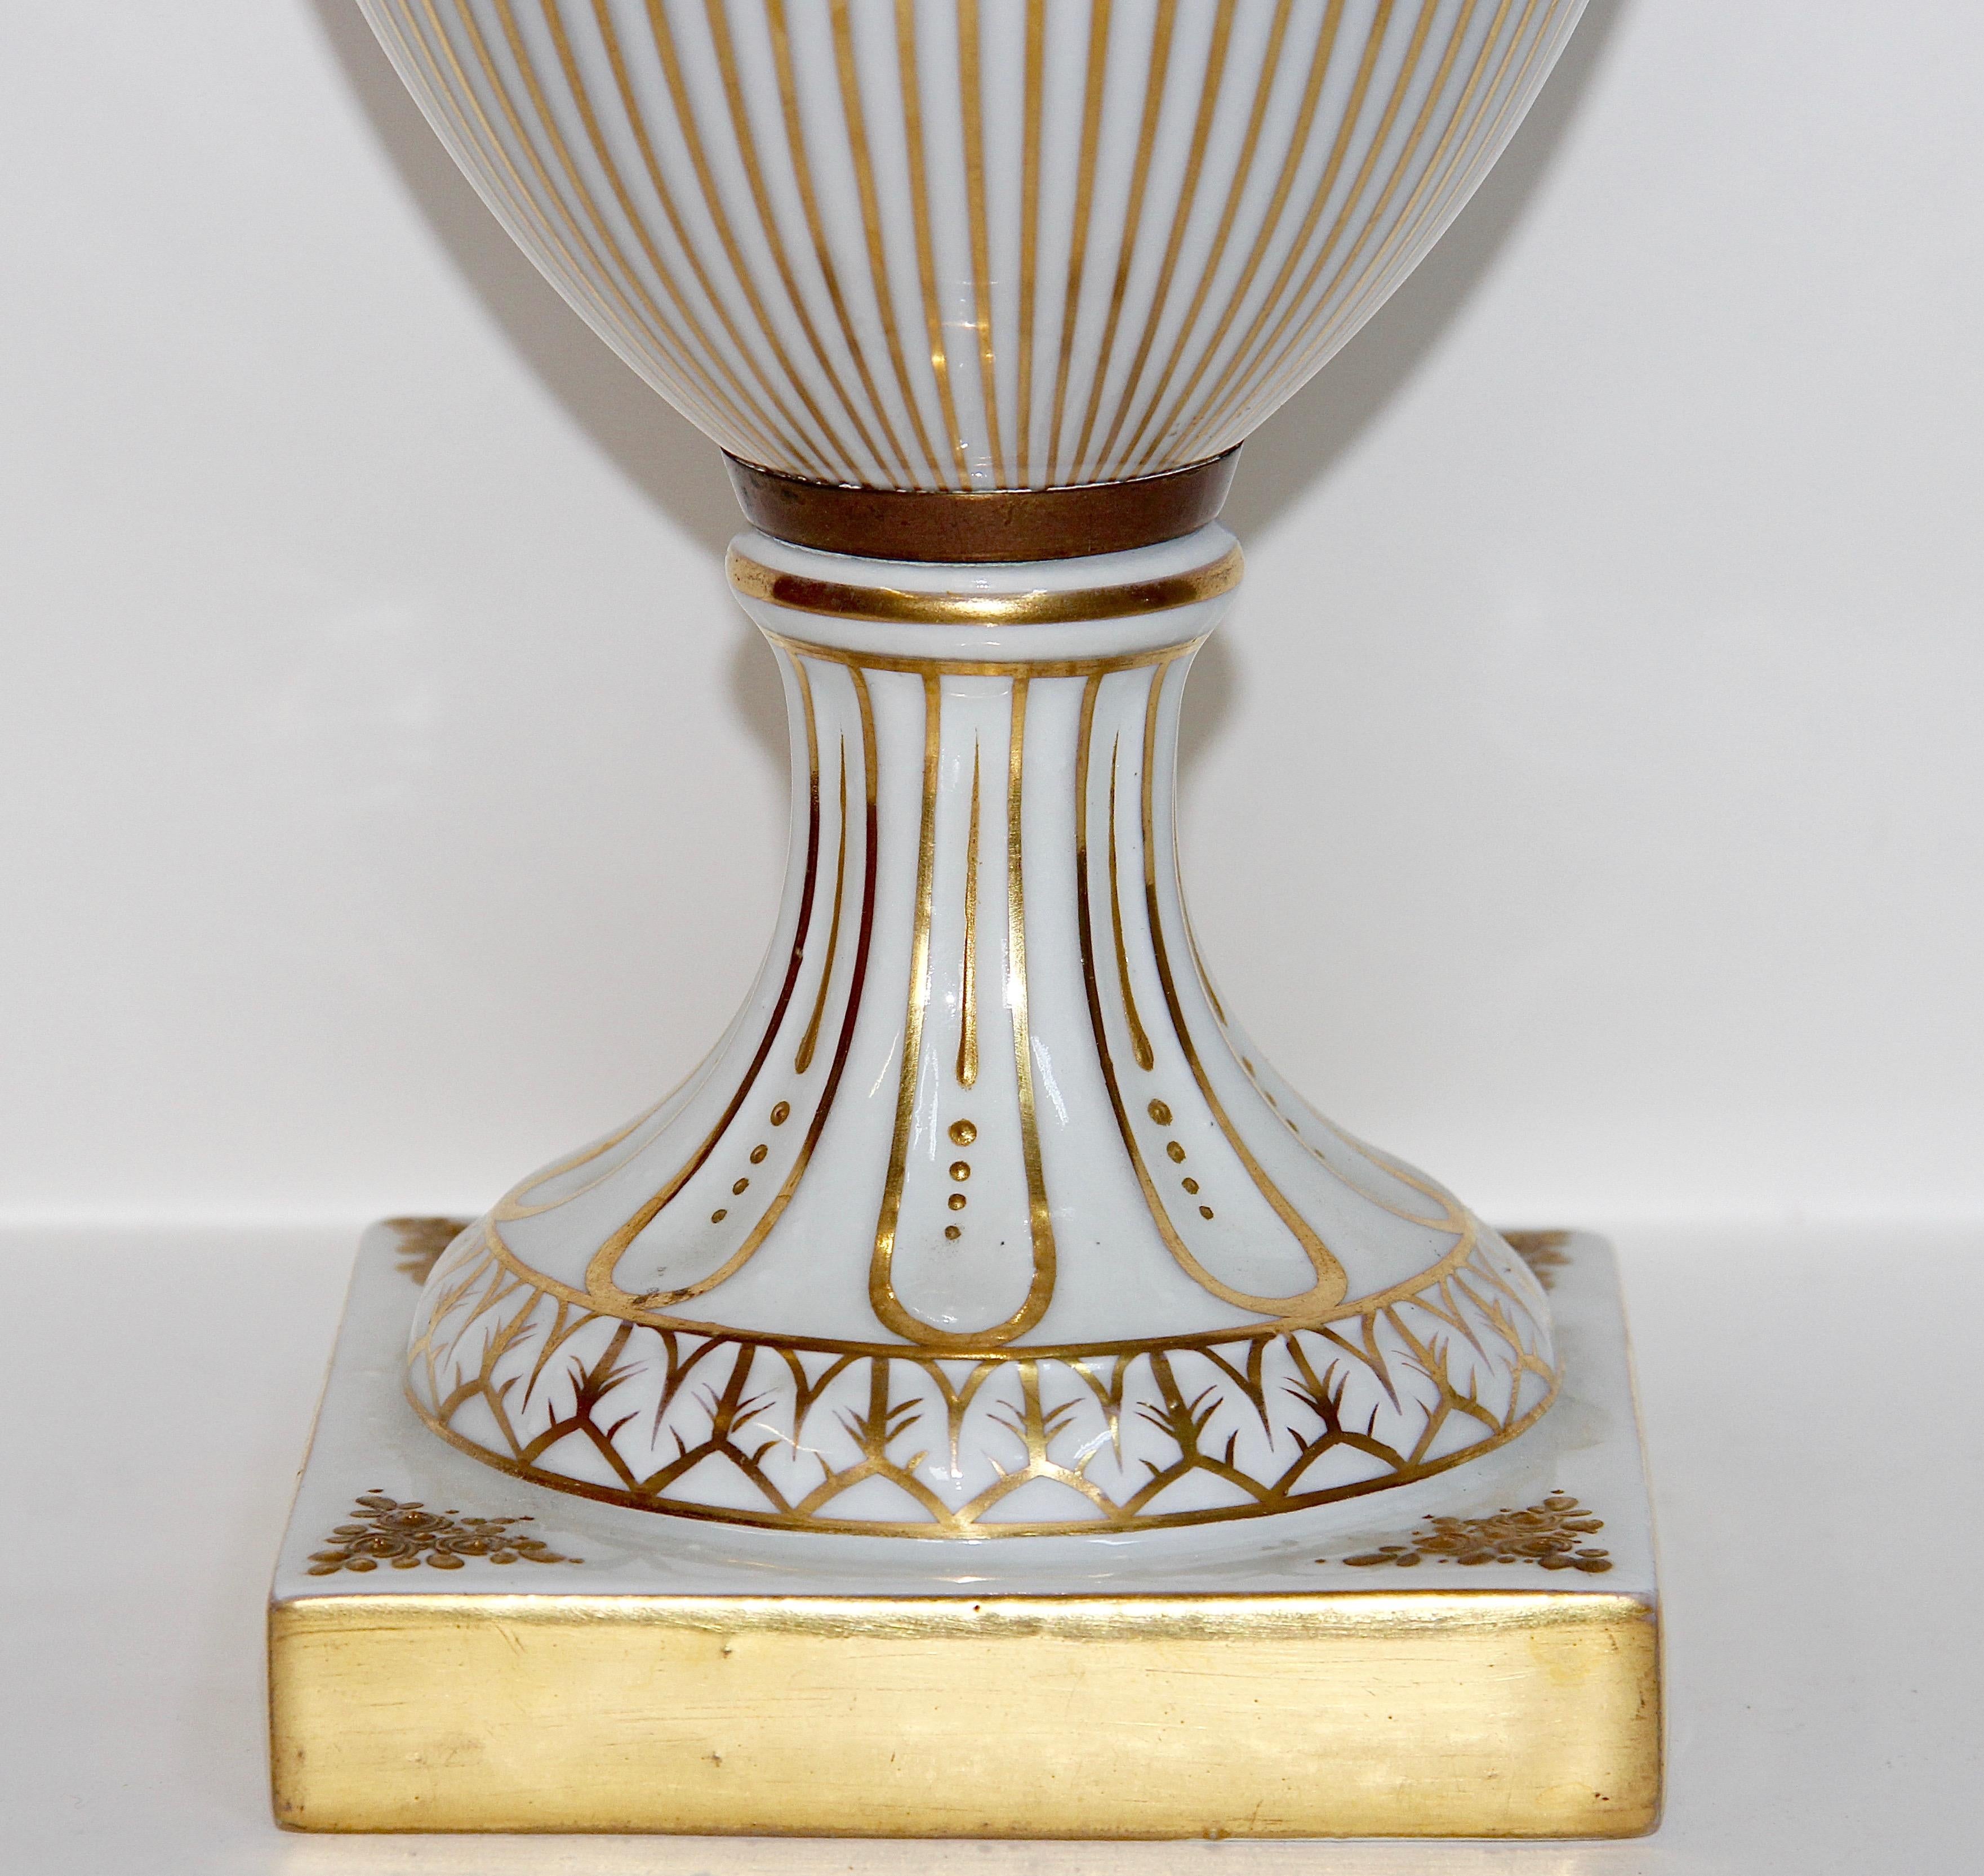 Magnificent Dresden porcelain, amphora, lid vase, urn. With gold painting.